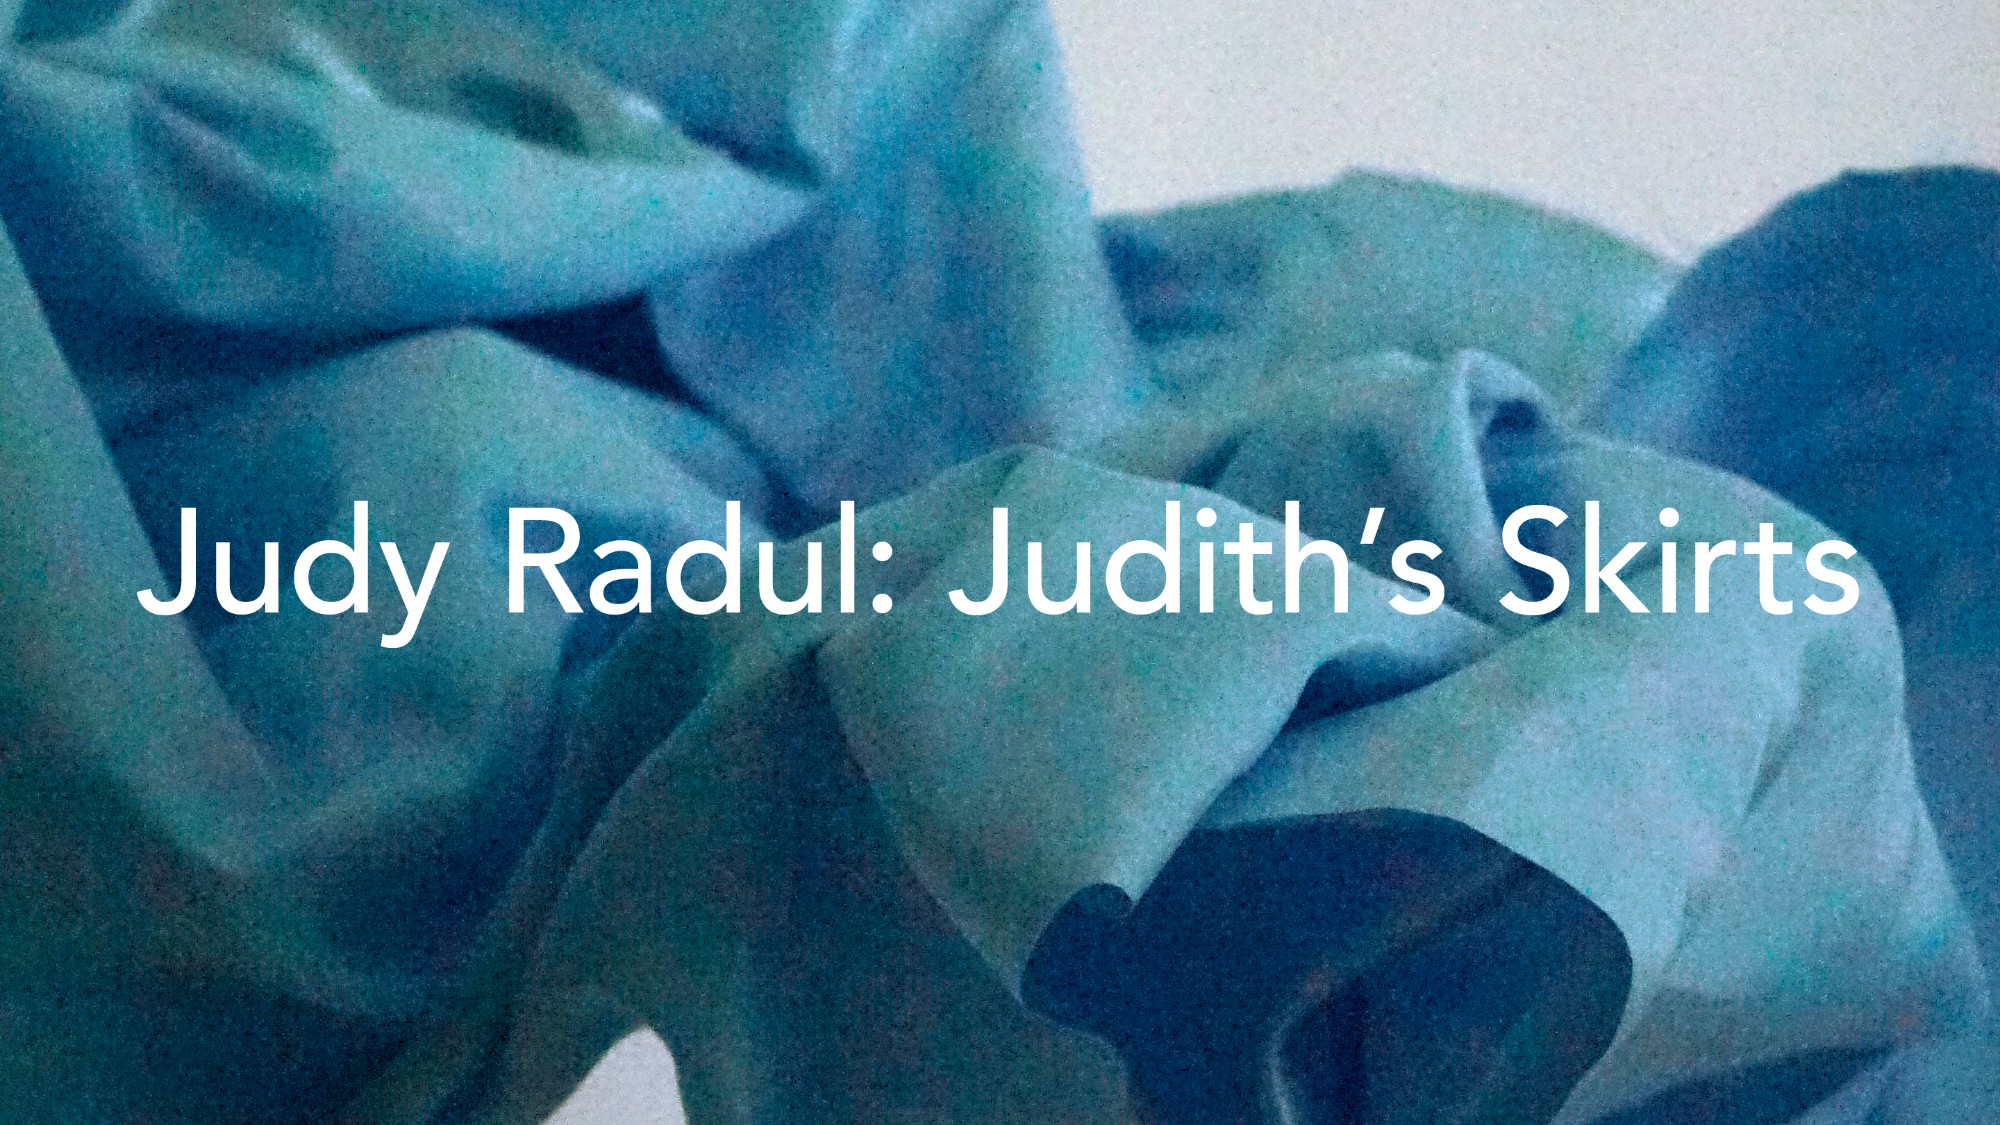 Judith’s Skirts